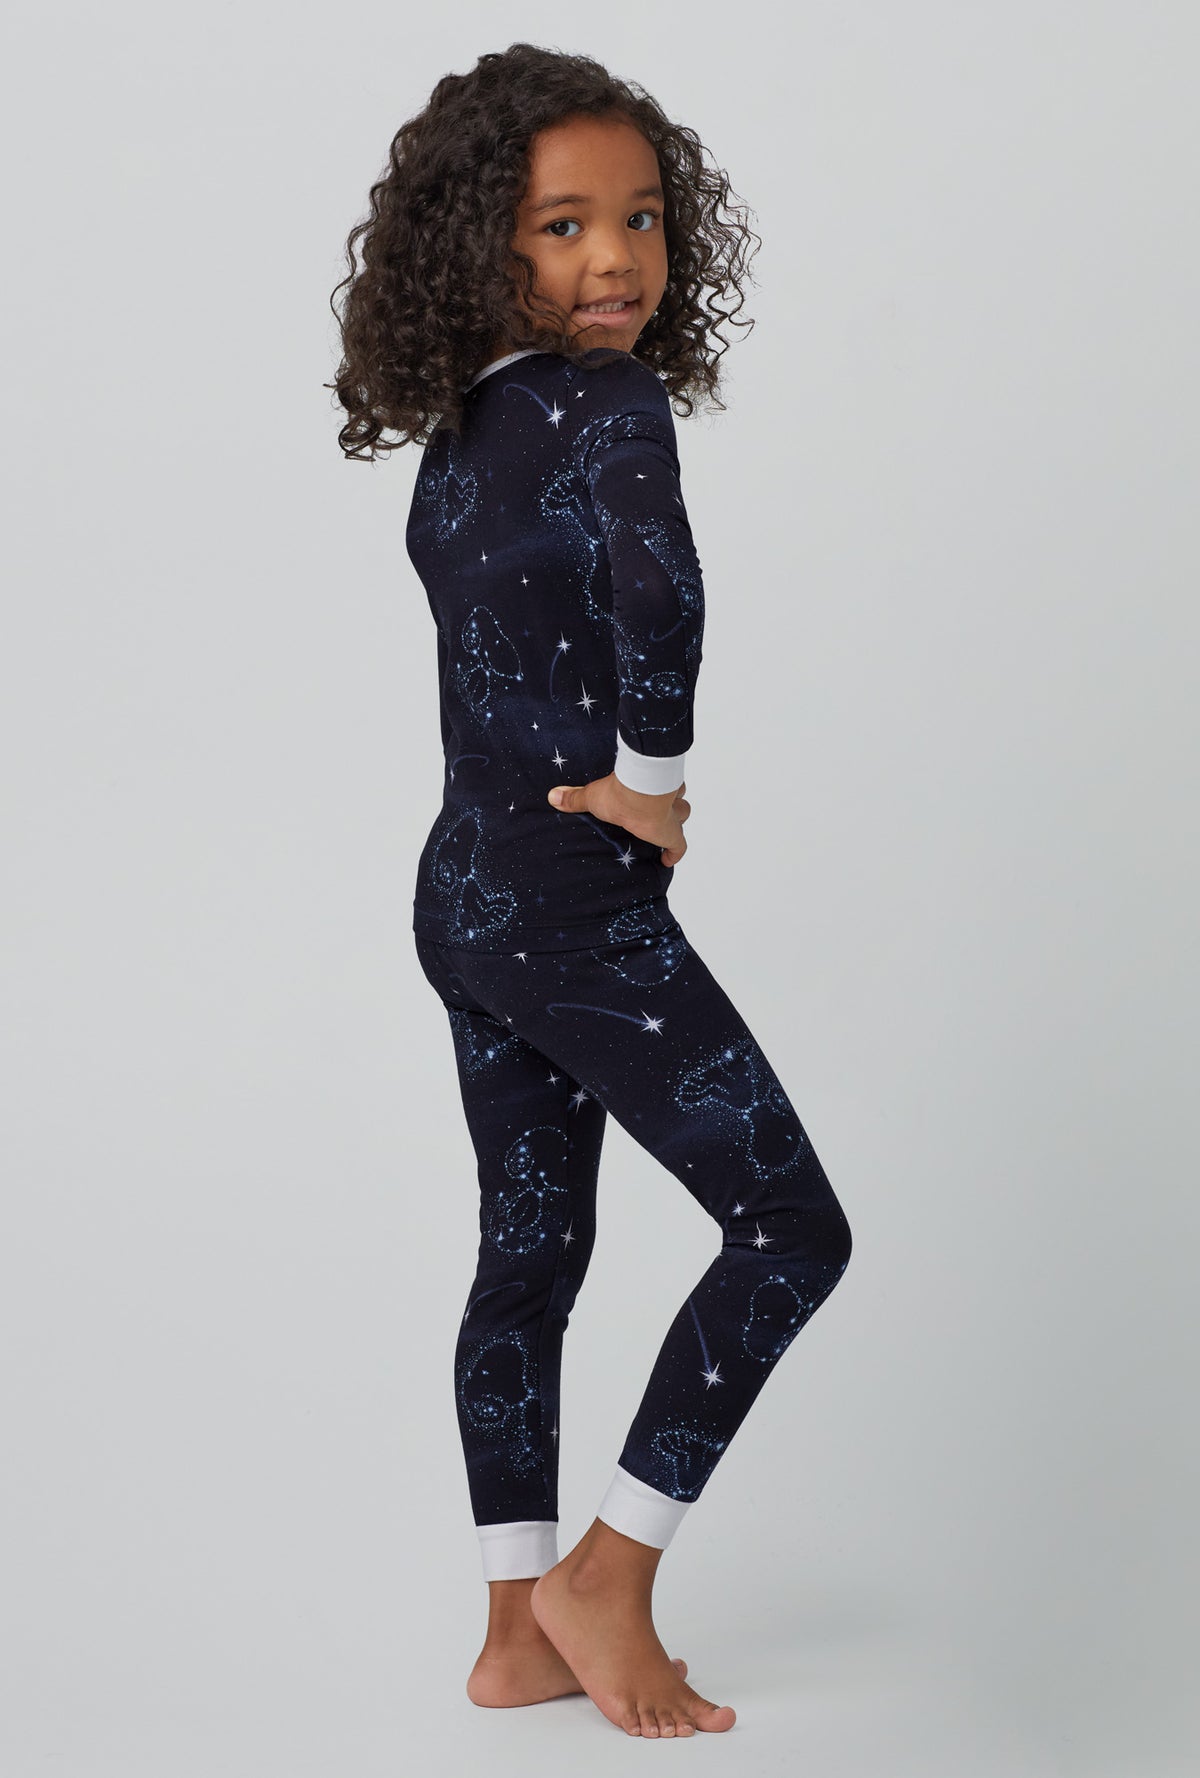 A girl wearing black long sleeve stretch jersey kids pj set with celestial snoopy print.